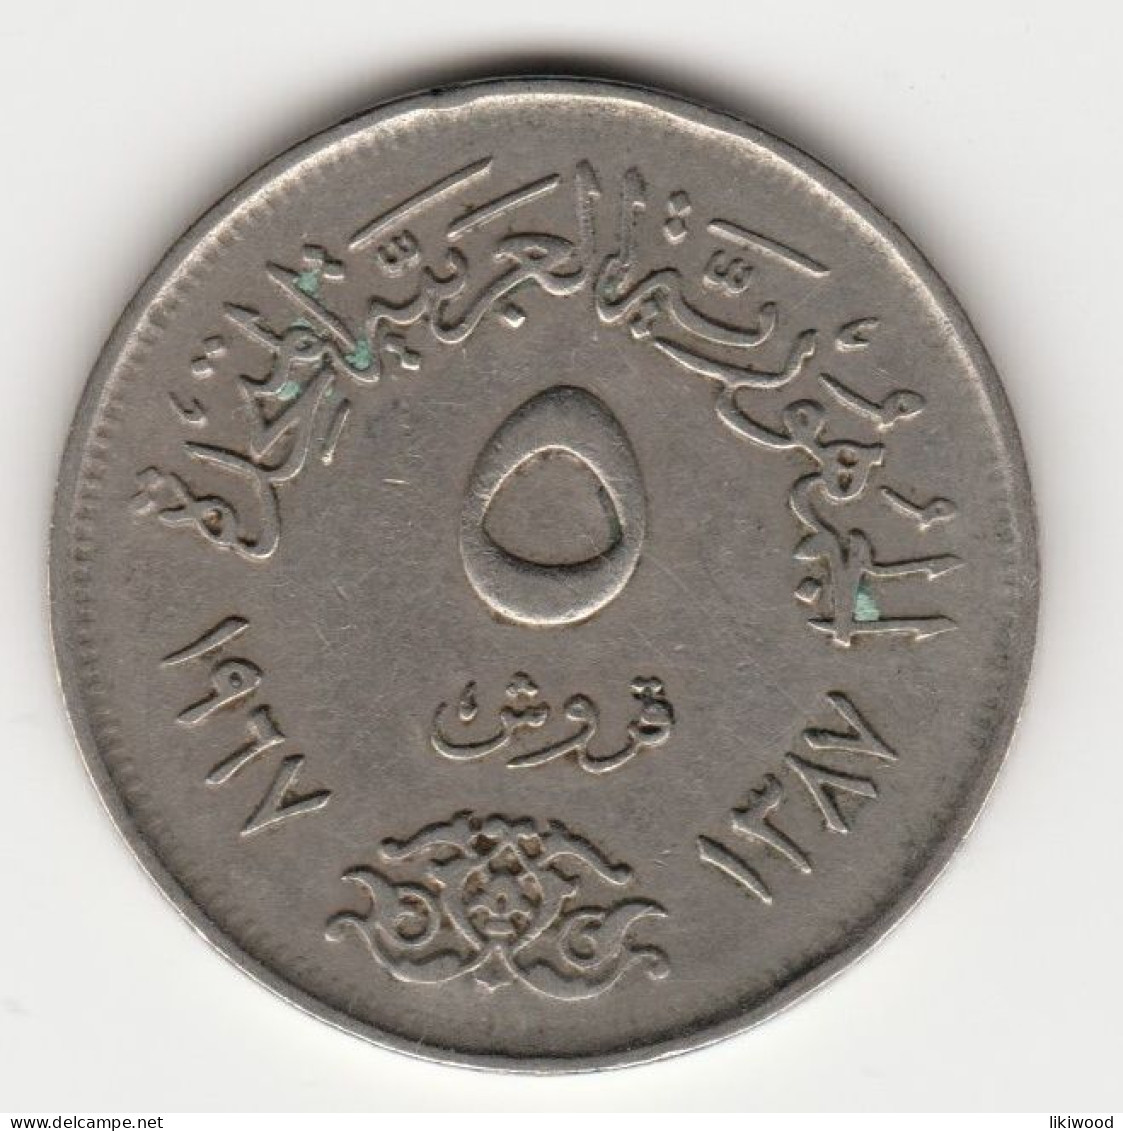 5 Qirsh - 1967 - Egypt - United Arab Republic - Aegypten